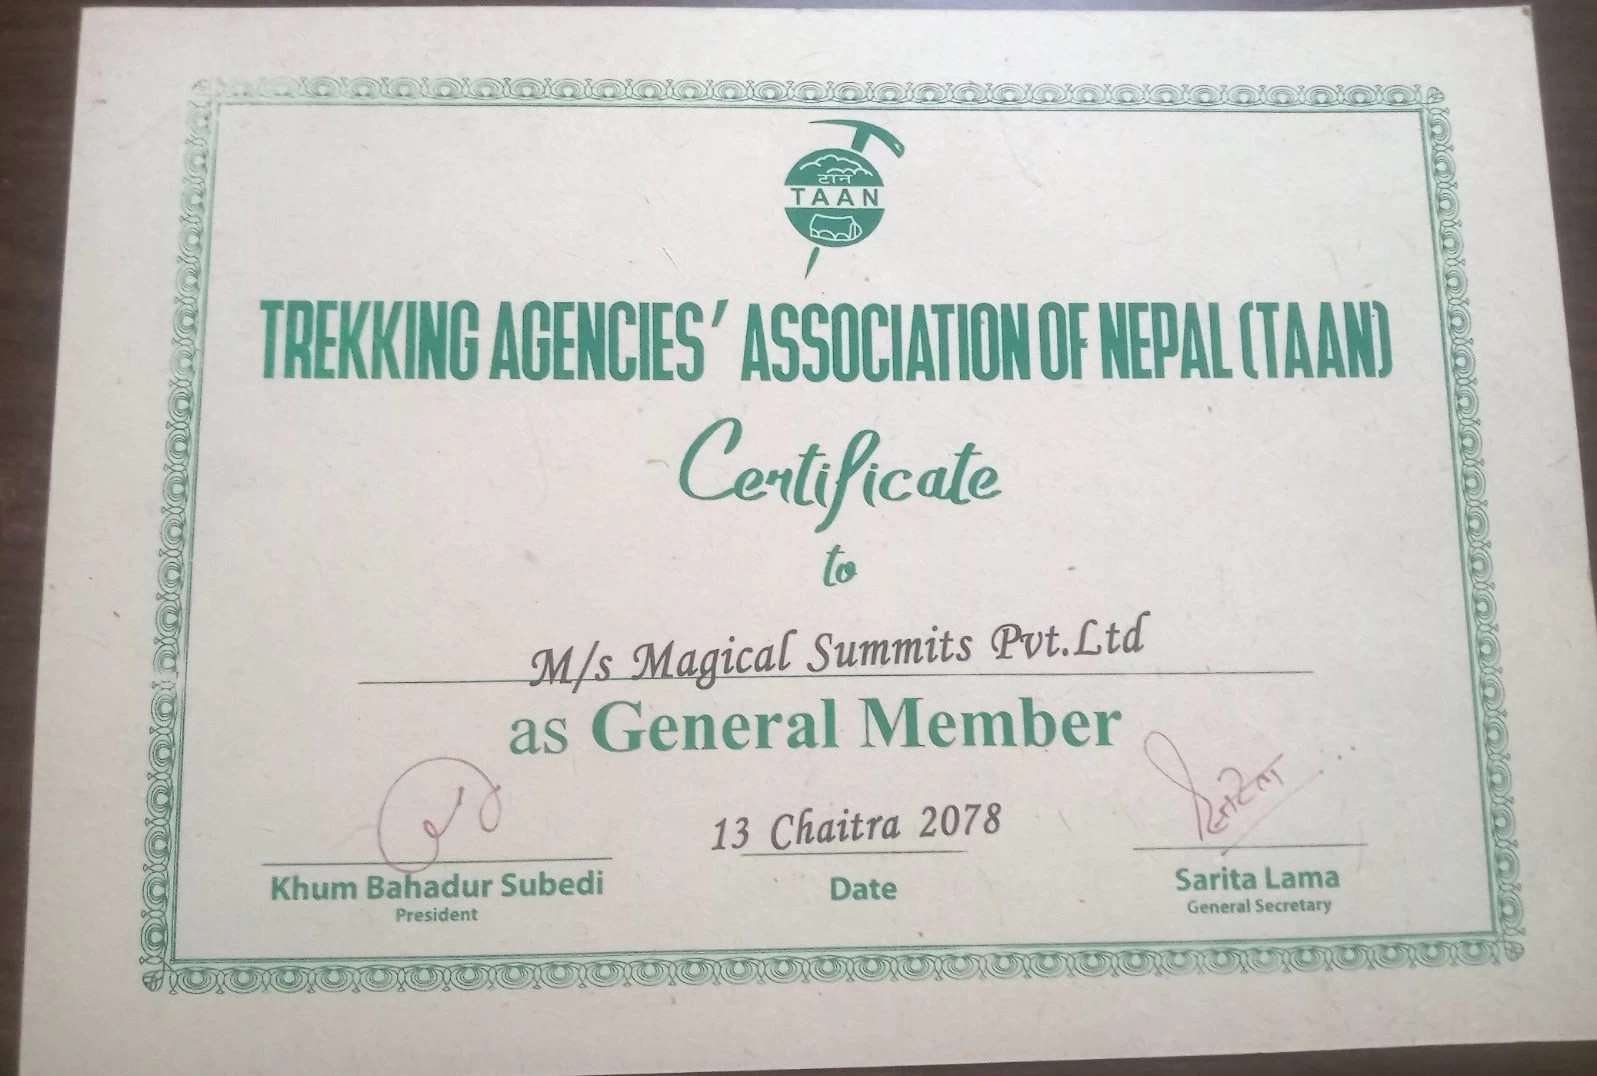 Trekking Agencies Association of Nepal (TAAN)